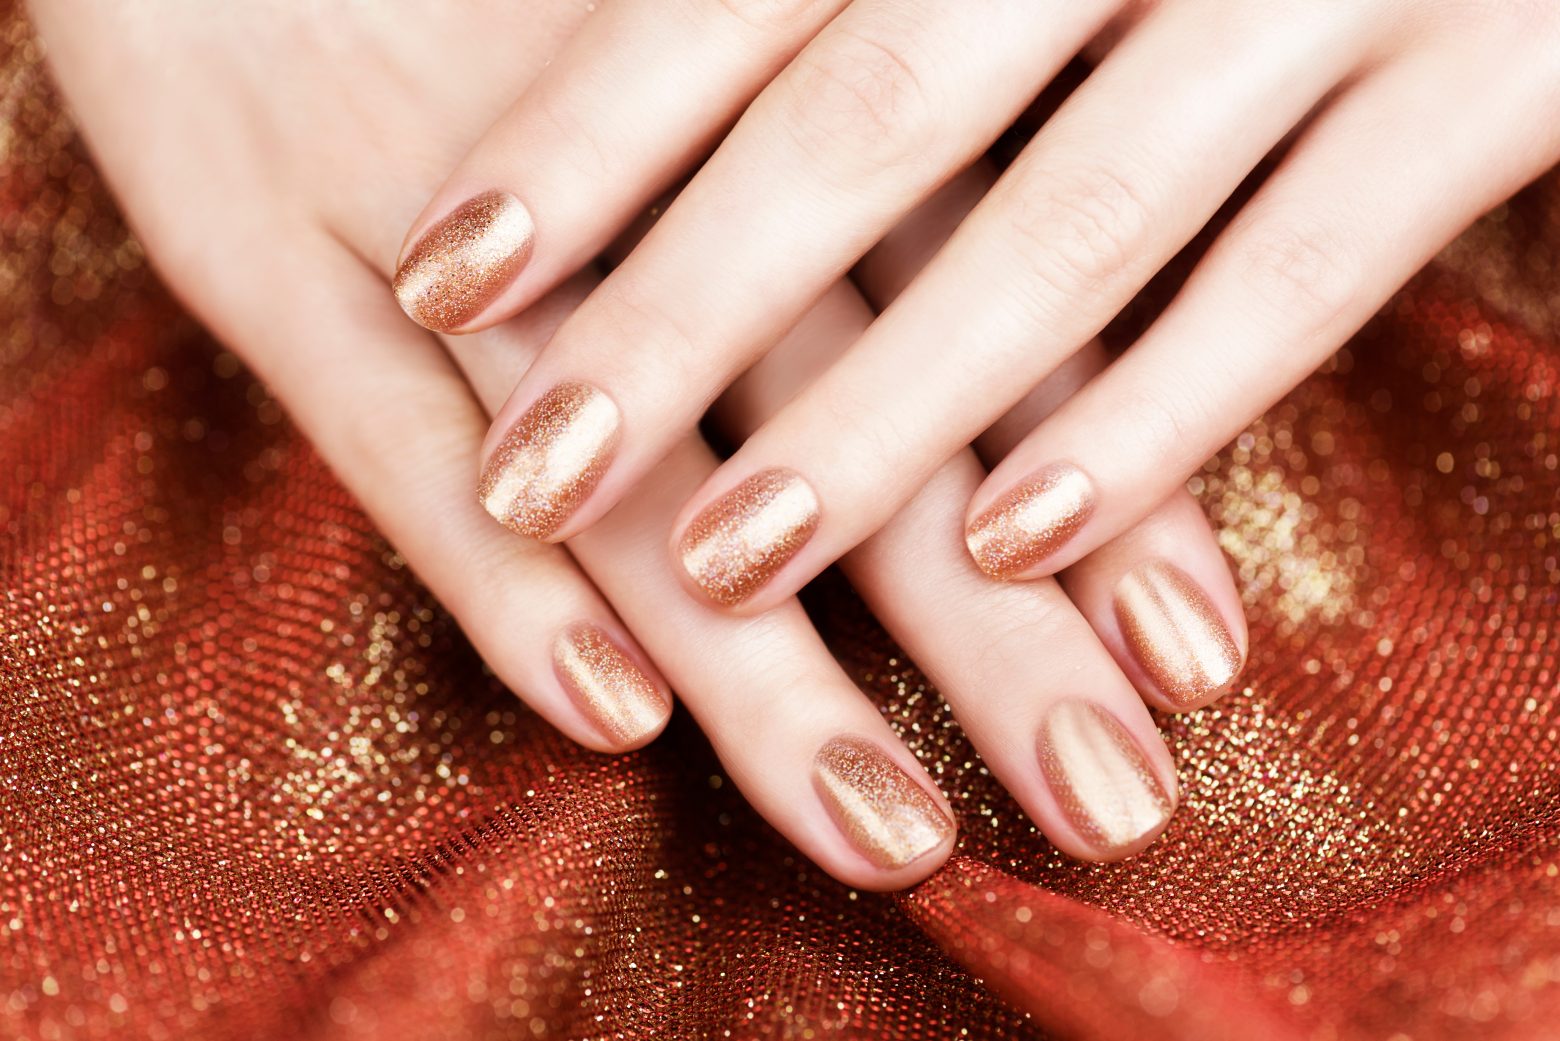 Bronze nails - Η απόλυτη τάση του καλοκαιριού που πρέπει να δοκιμάσεις